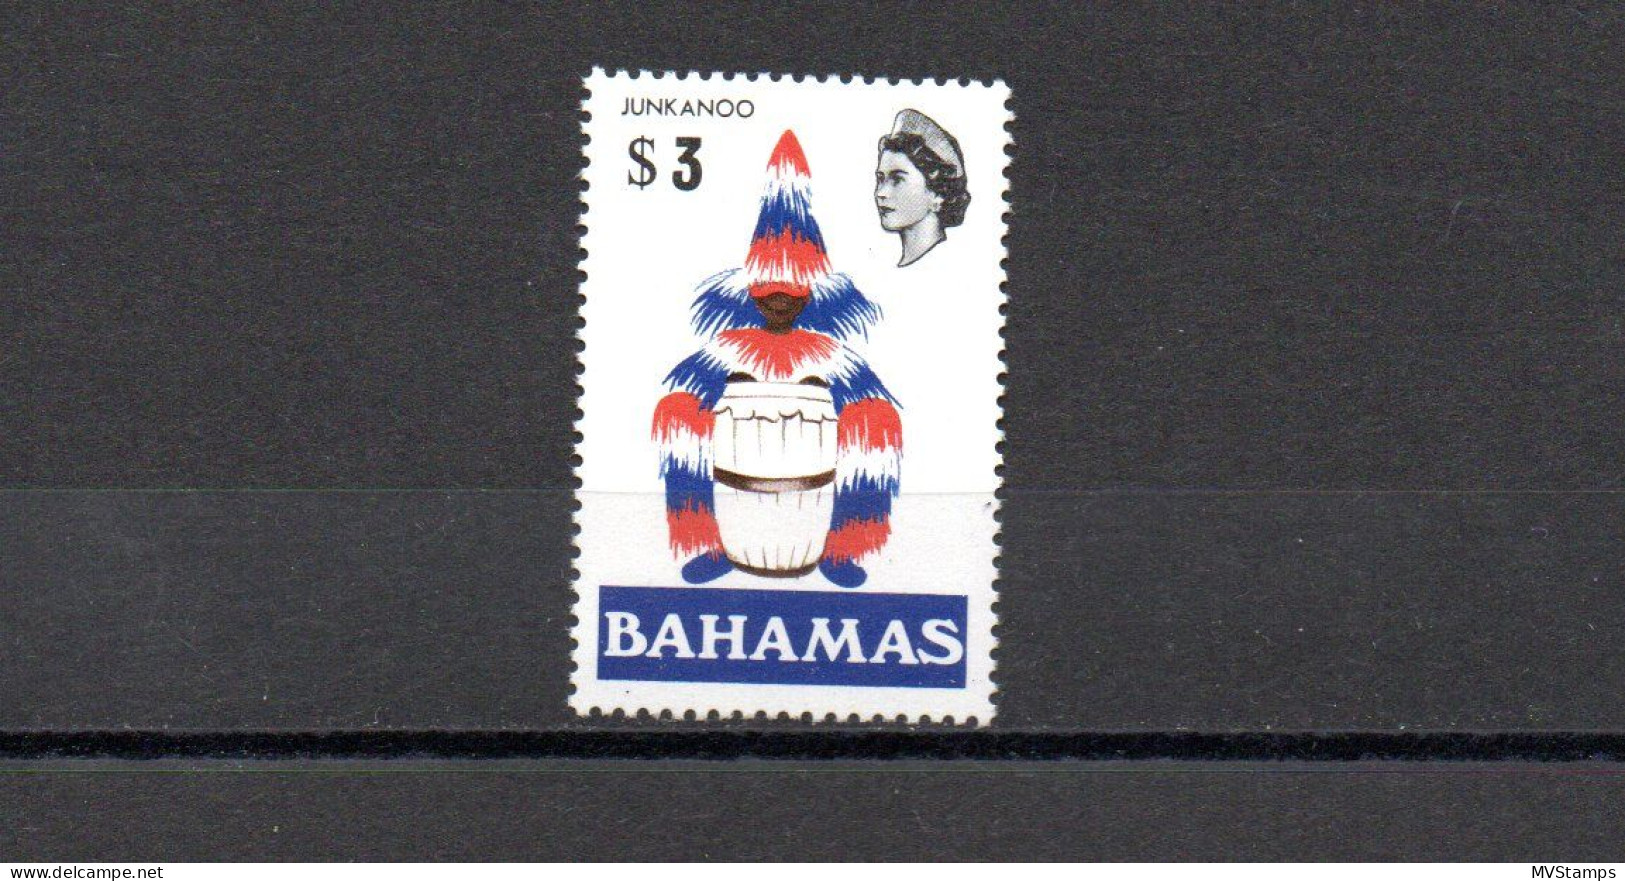 Bahamas 1978 Definitives $3.00 Junkanov MNH - Bahamas (1973-...)